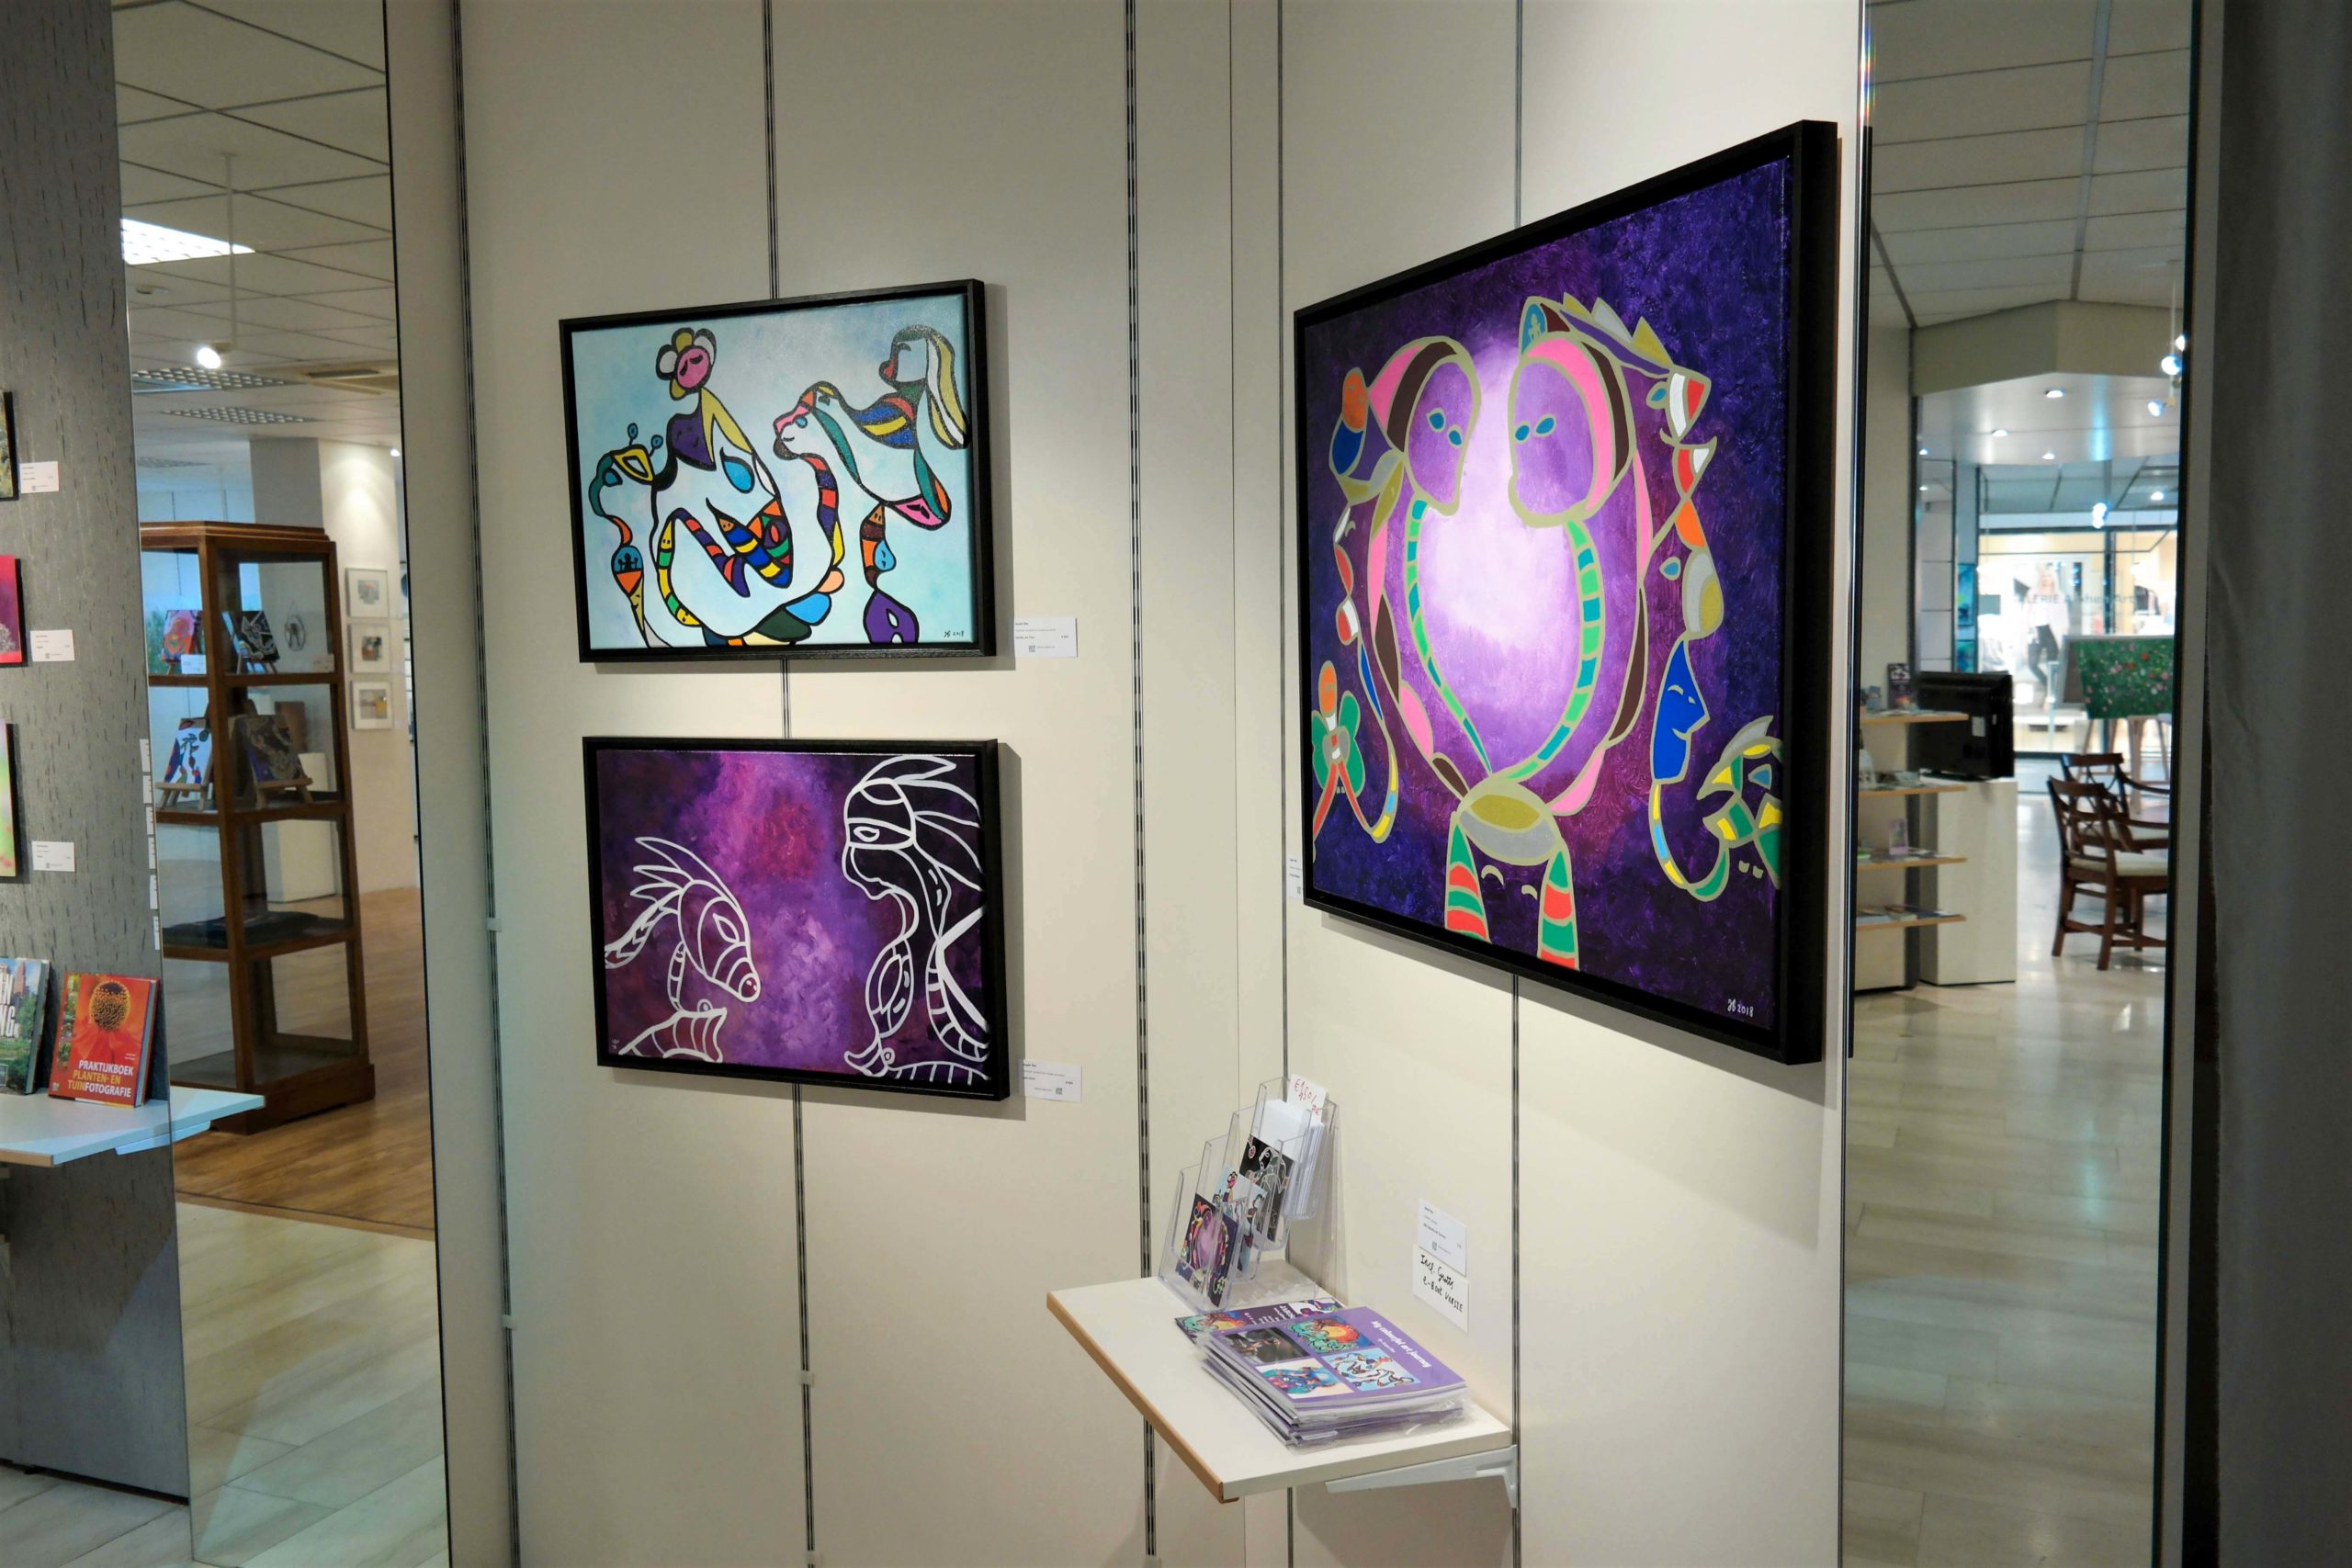 Exhibition in Gallery “Galerie Alphen Art”